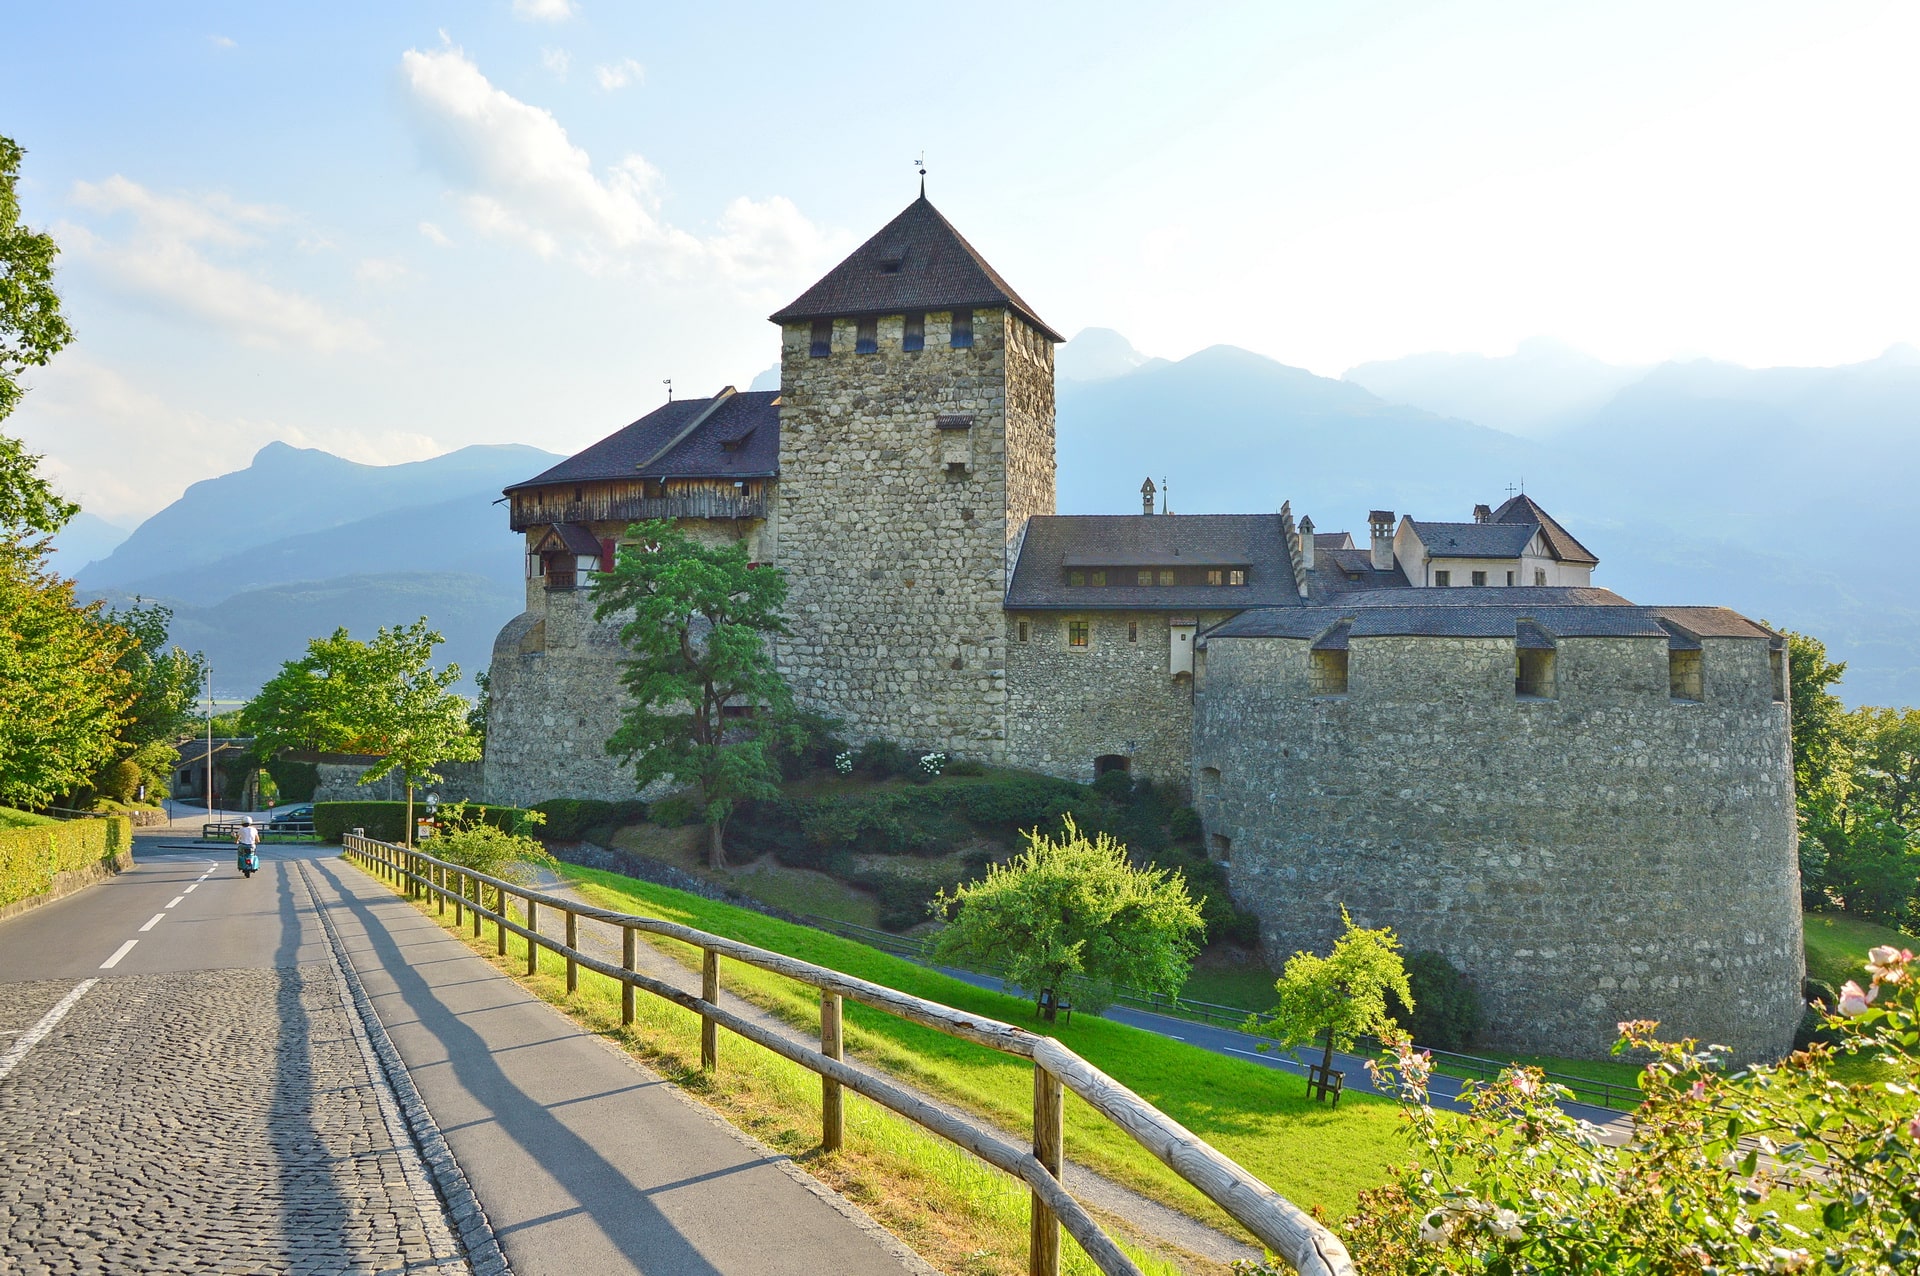 Vaduz Castle is home to the Princely Family of Liechtenstein